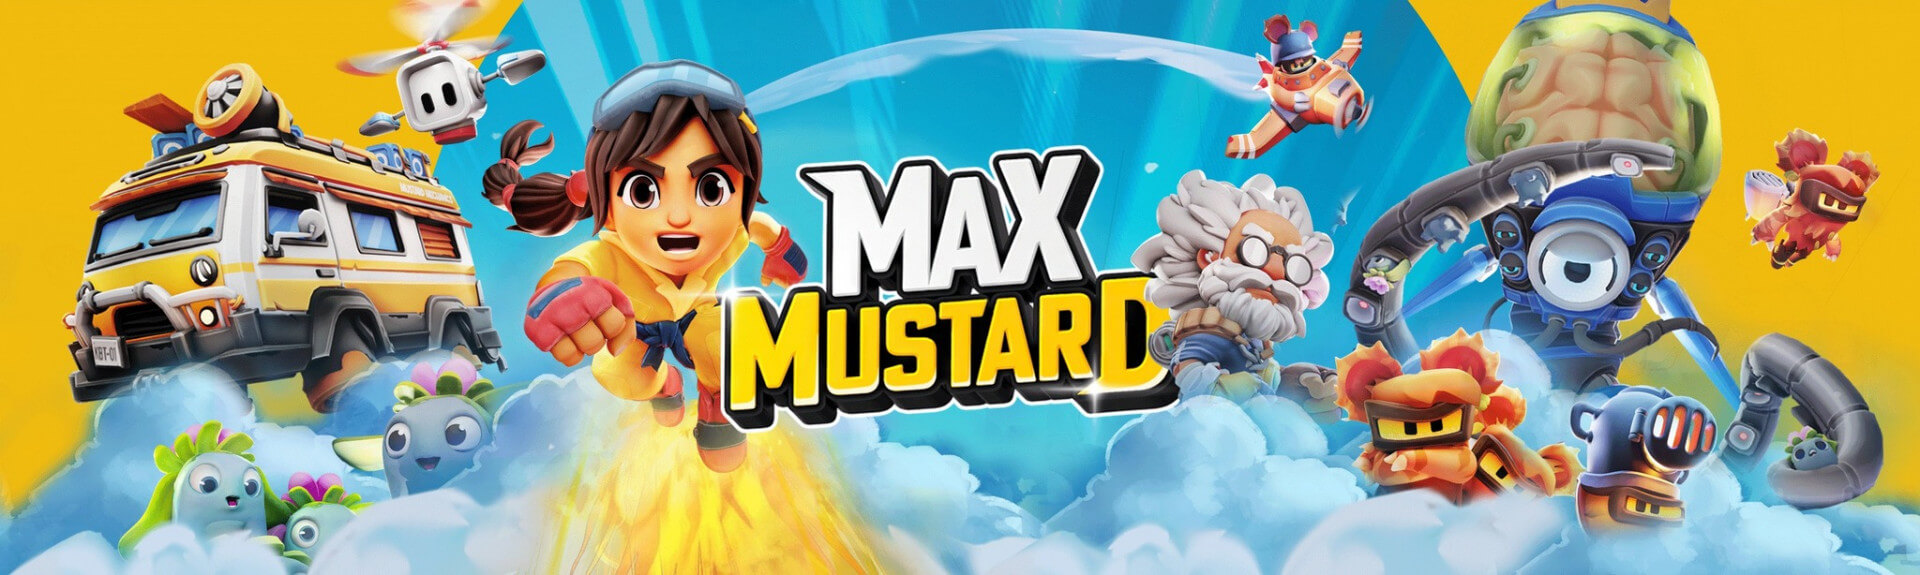 Max Mustard Banner Image